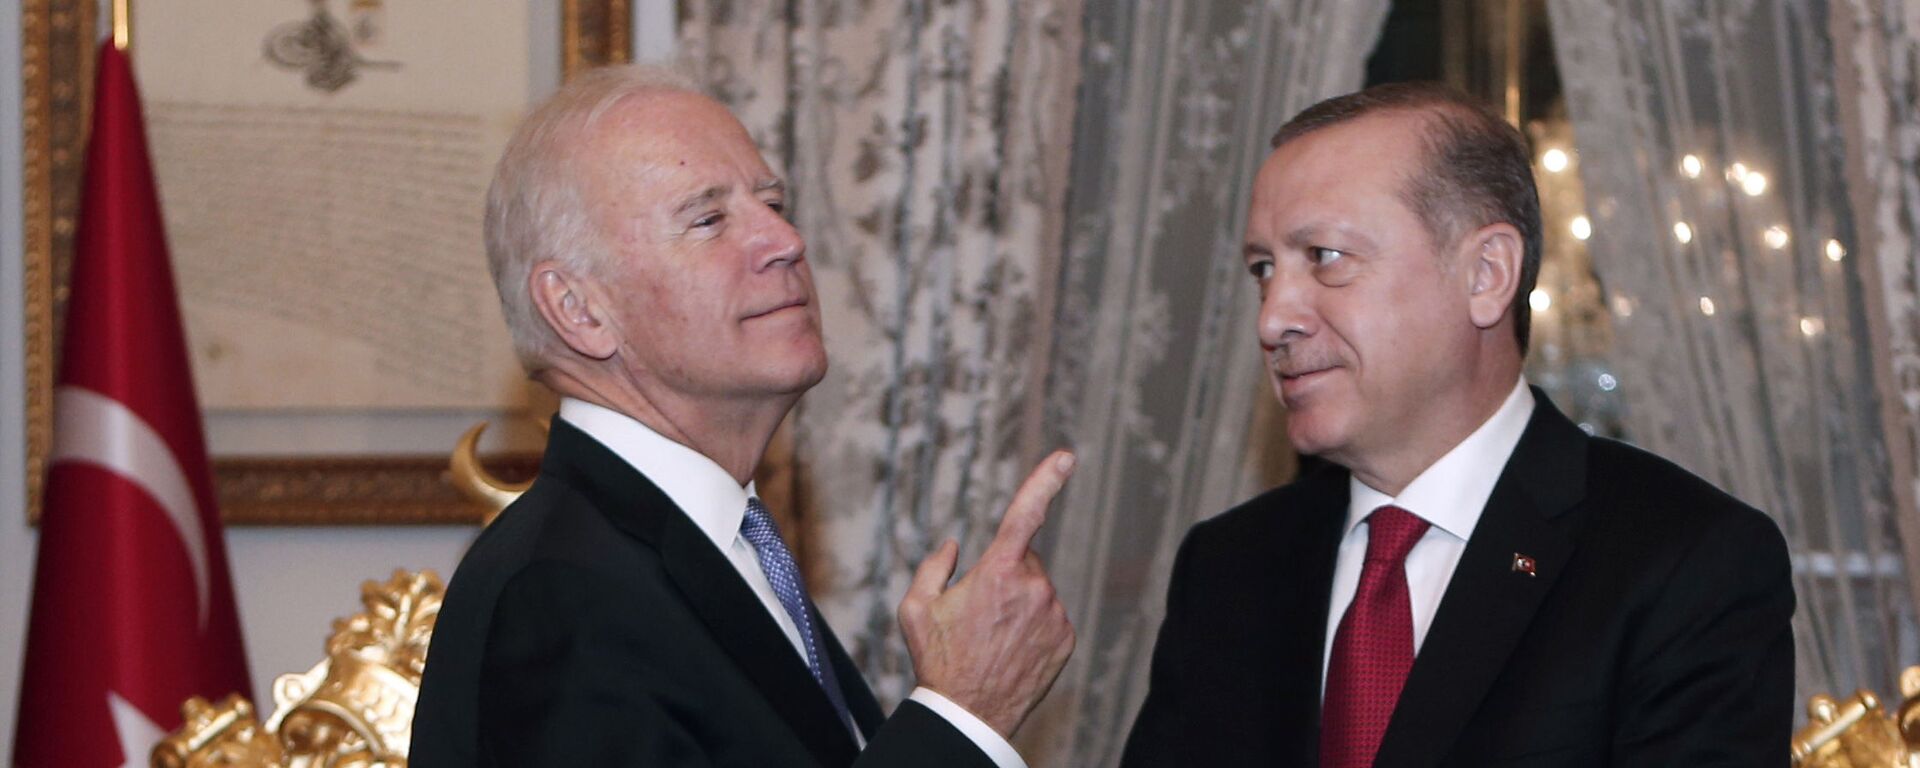 Joe Biden trong cuộc gặp với Recep Tayyip Erdogan ở Istanbul - Sputnik Việt Nam, 1920, 26.04.2022